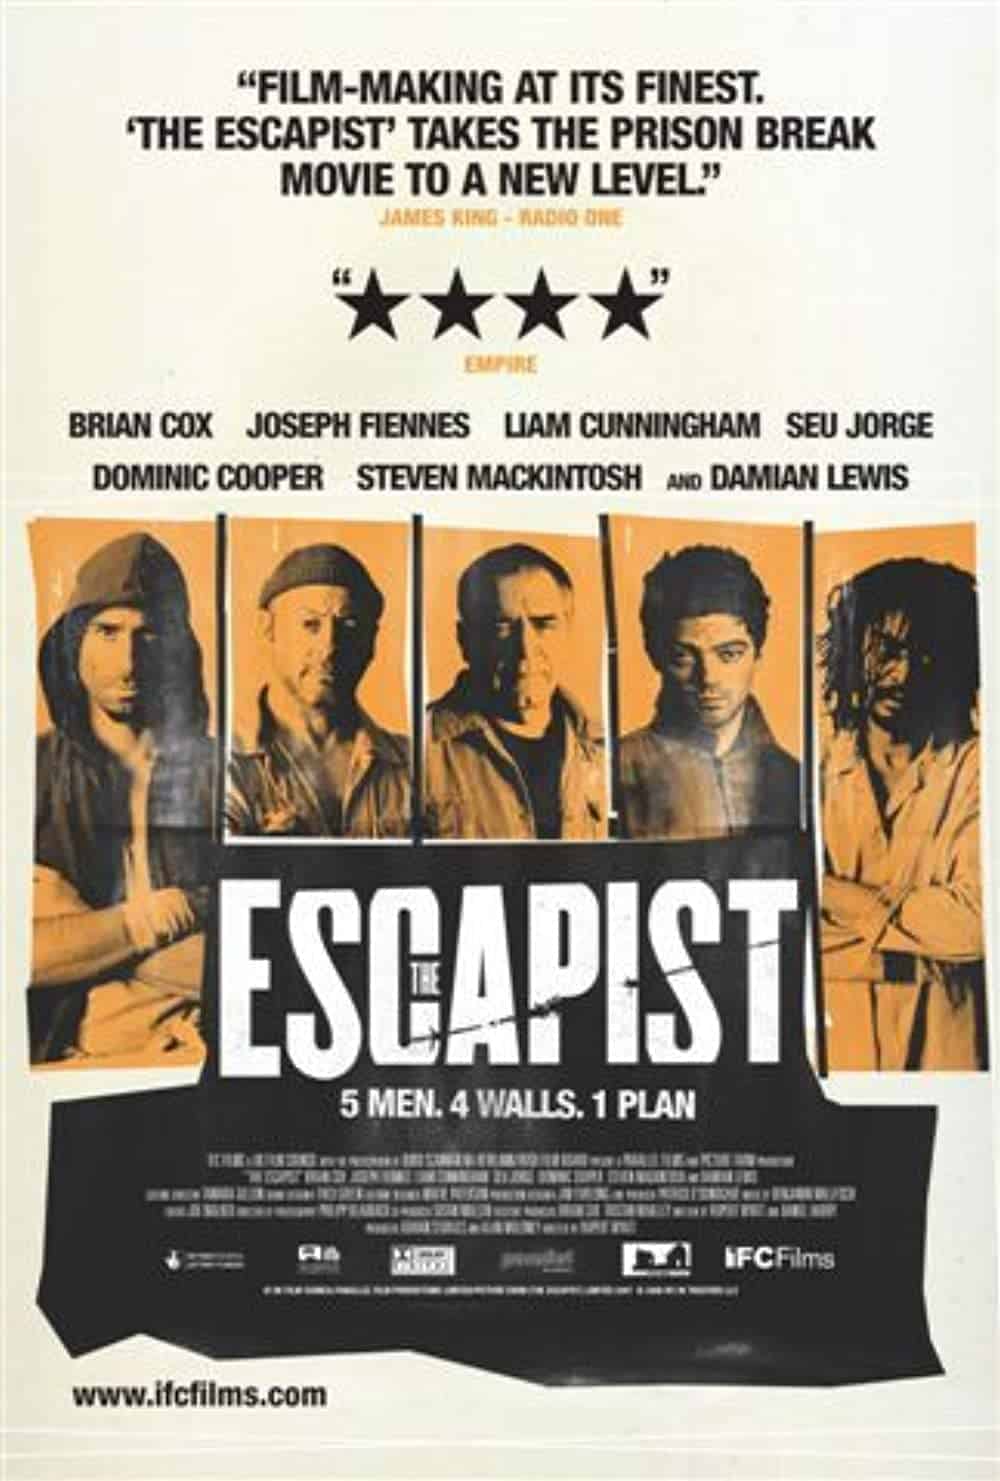 Best Prison Movies You Can't Miss TThe Escapist (2008)